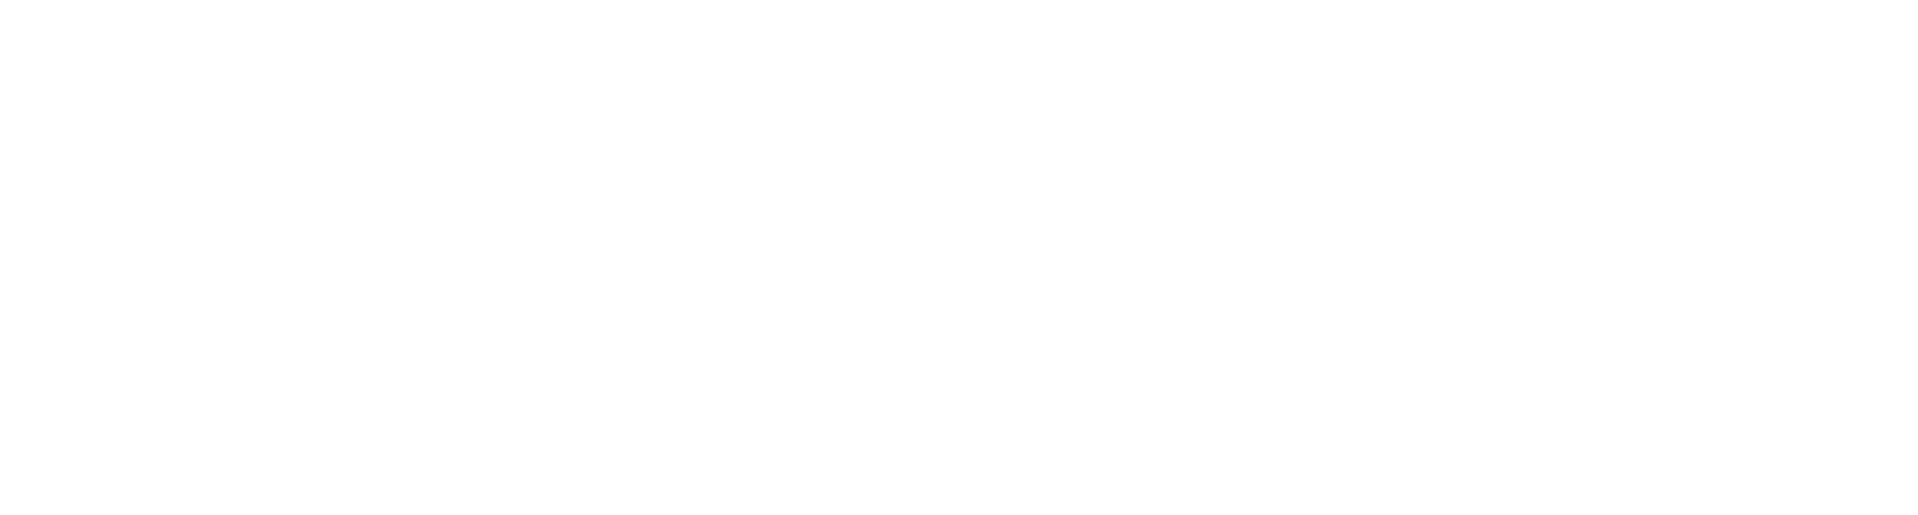 Medical White Logo - Revenue Cycle Management & Medical Billing Company